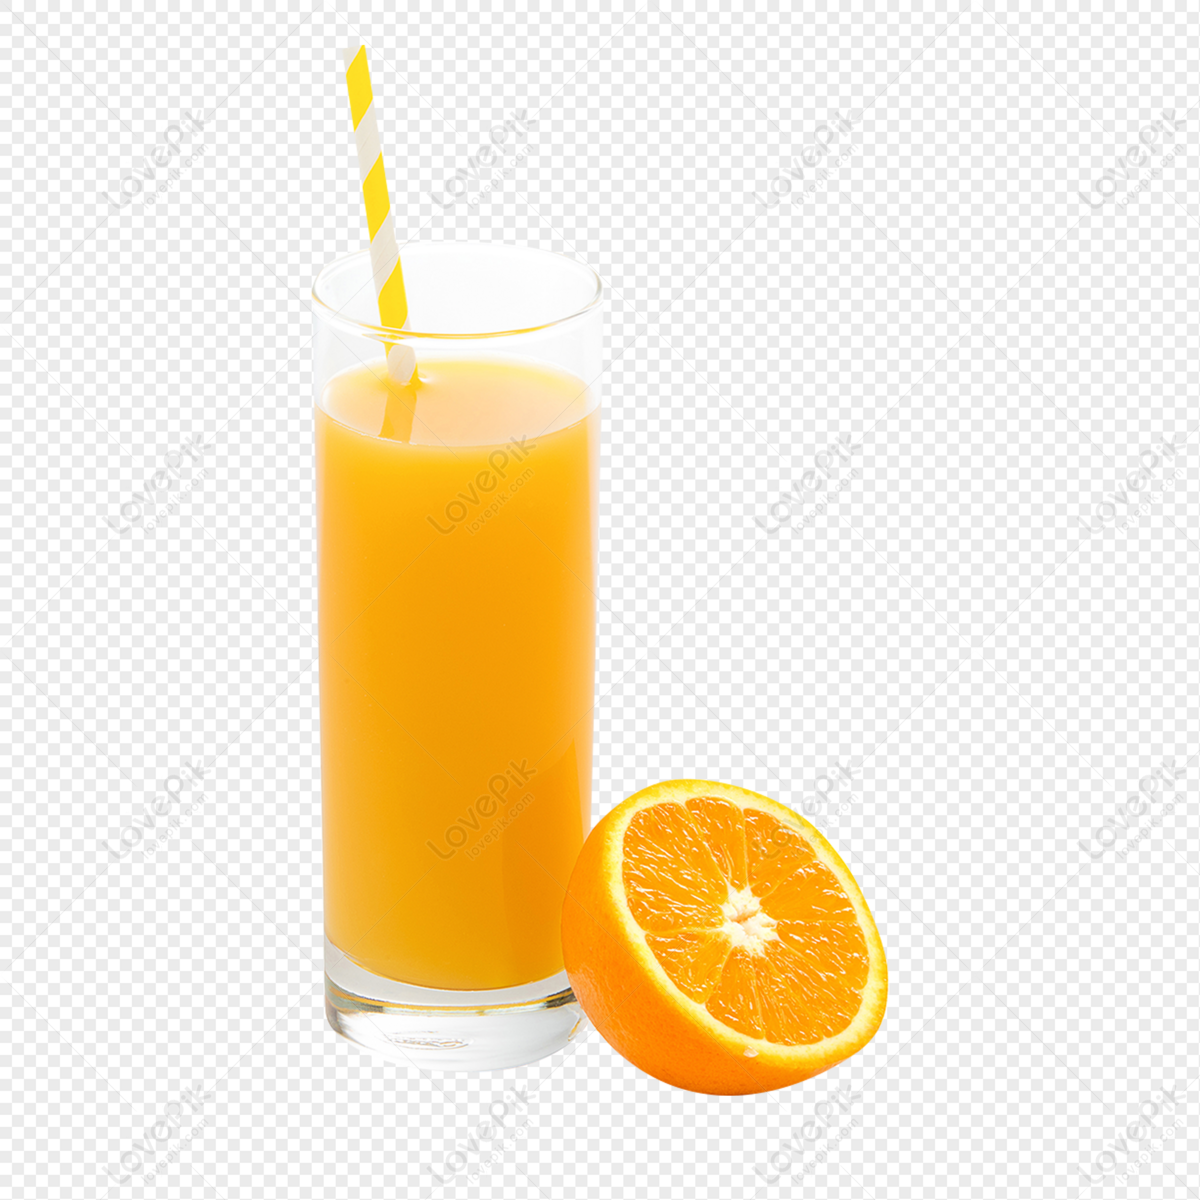 Fresh Orange Juice Png Image And Psd File For Free Download Lovepik